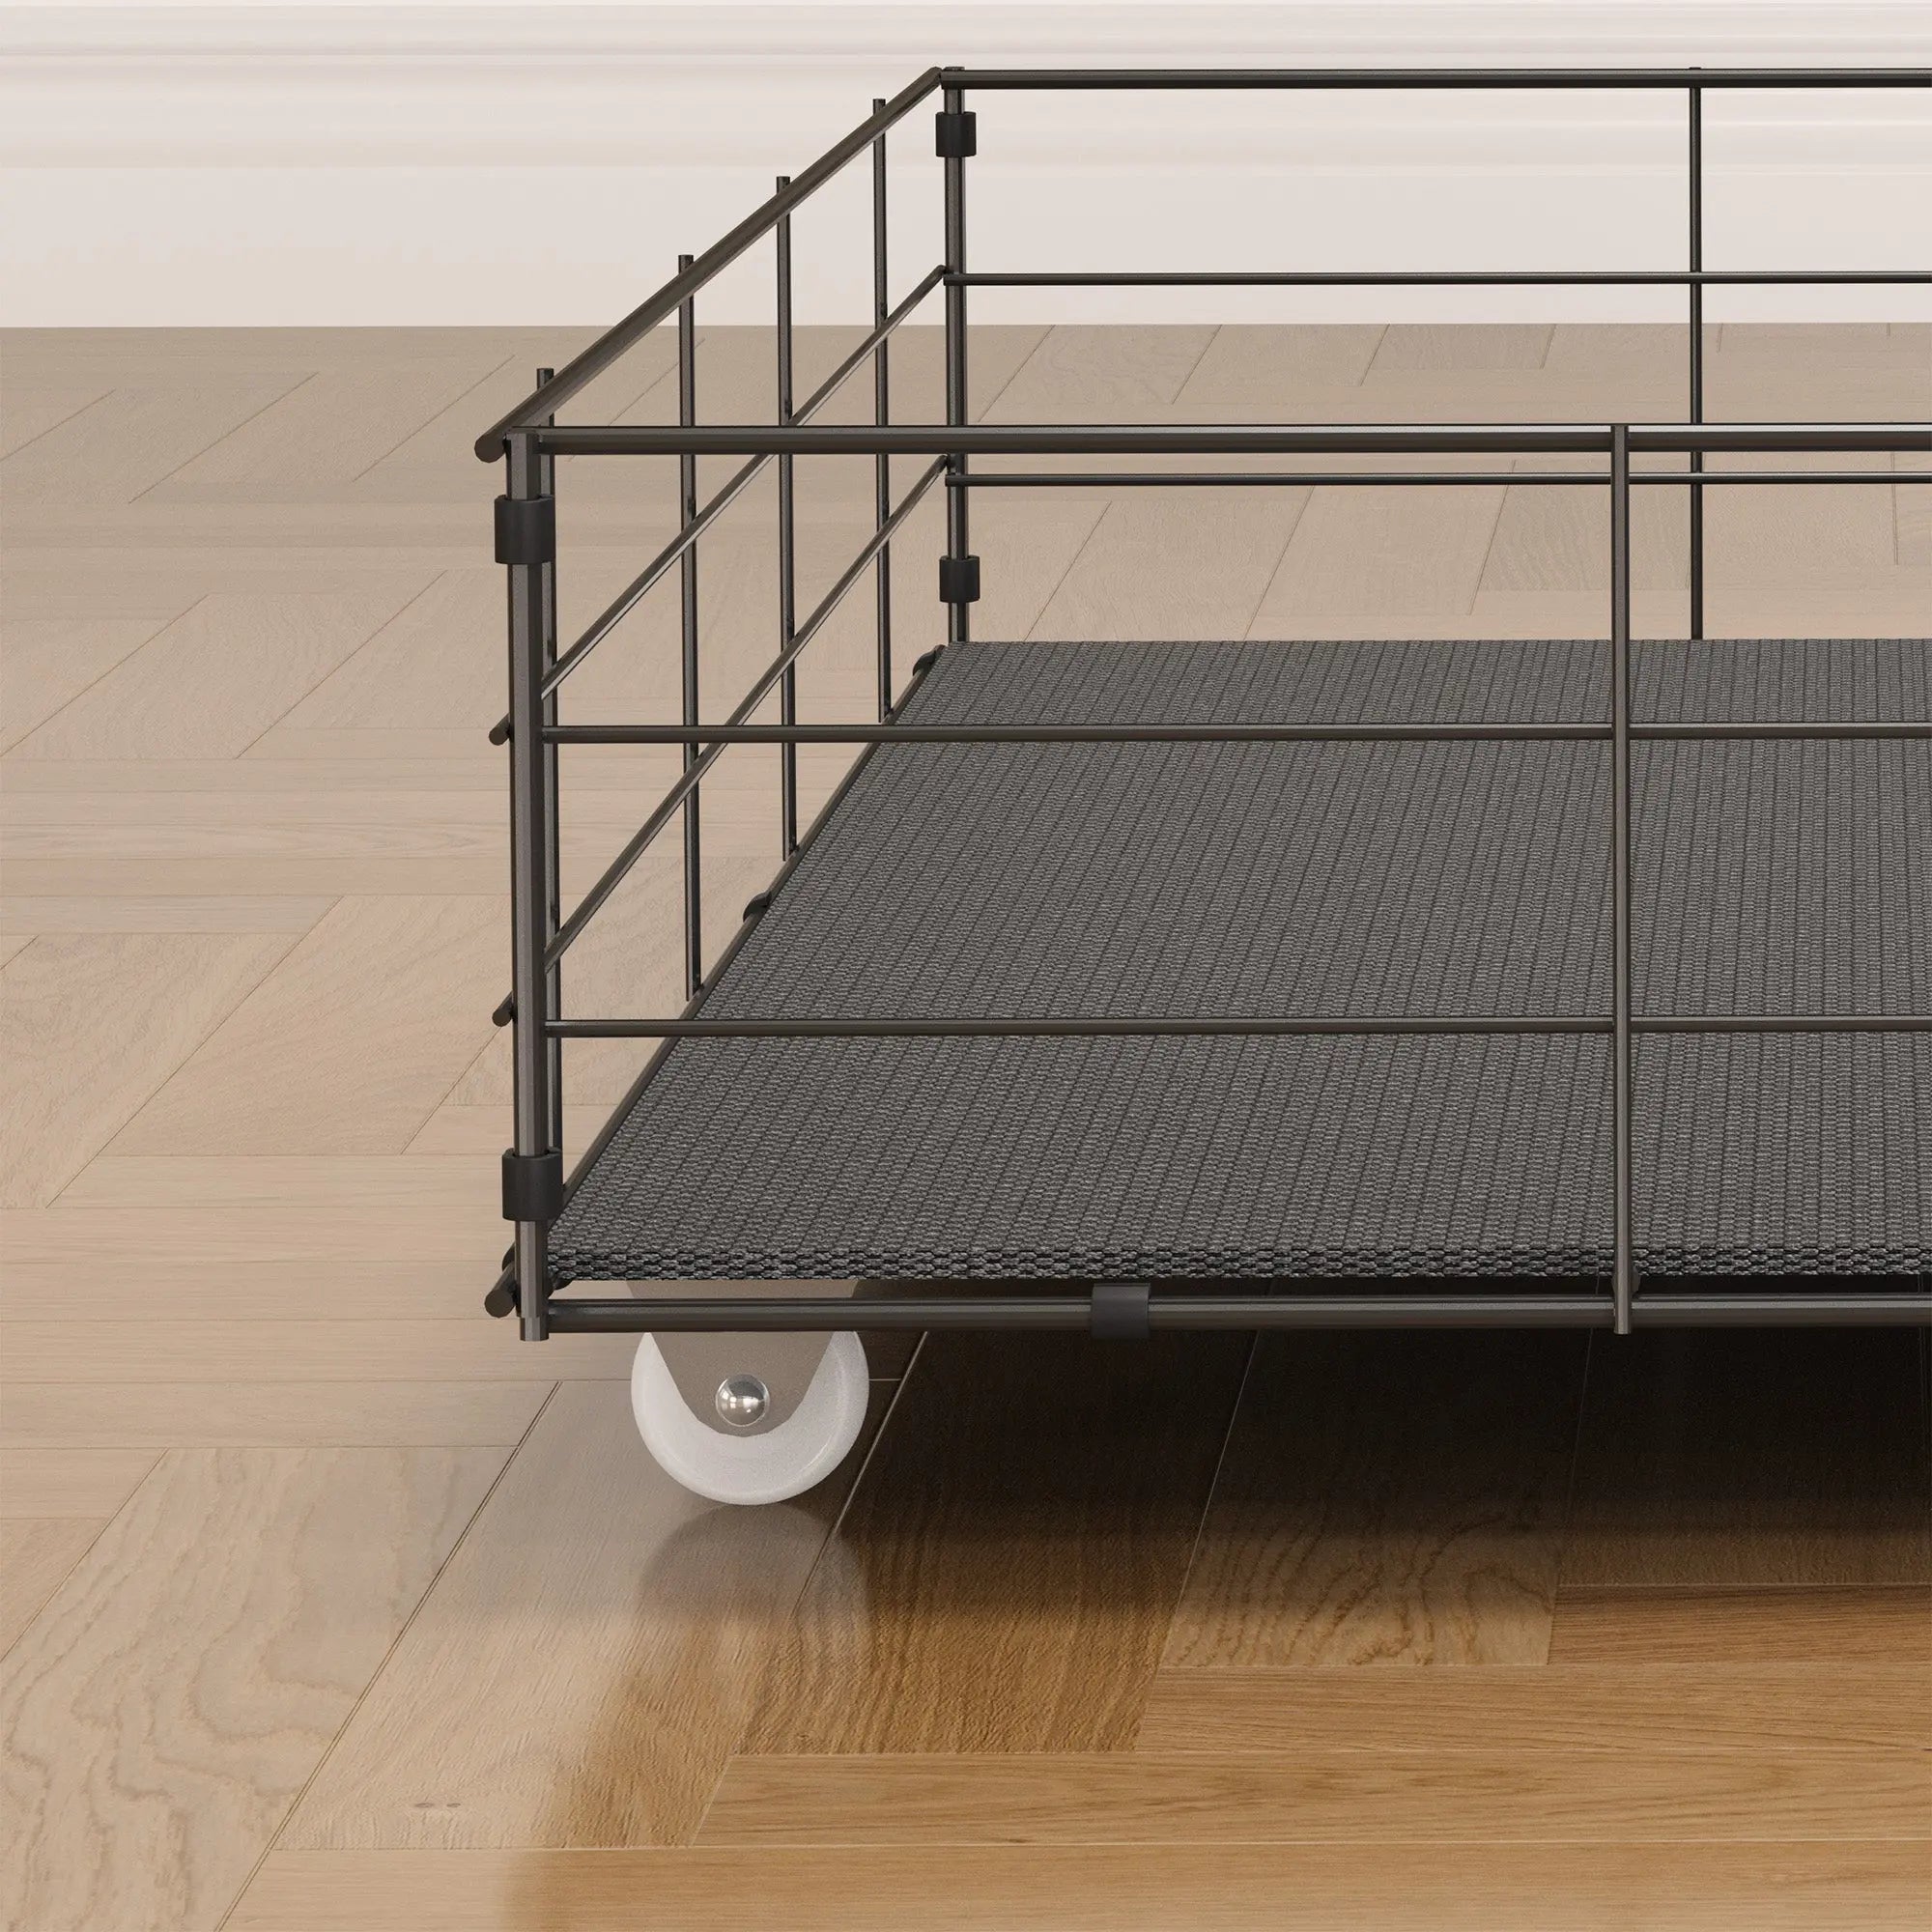 Bellemave® Platform Bed with LED,4 Under-bed Portable Storage Drawers and Wings Headboard Design Bellemave®